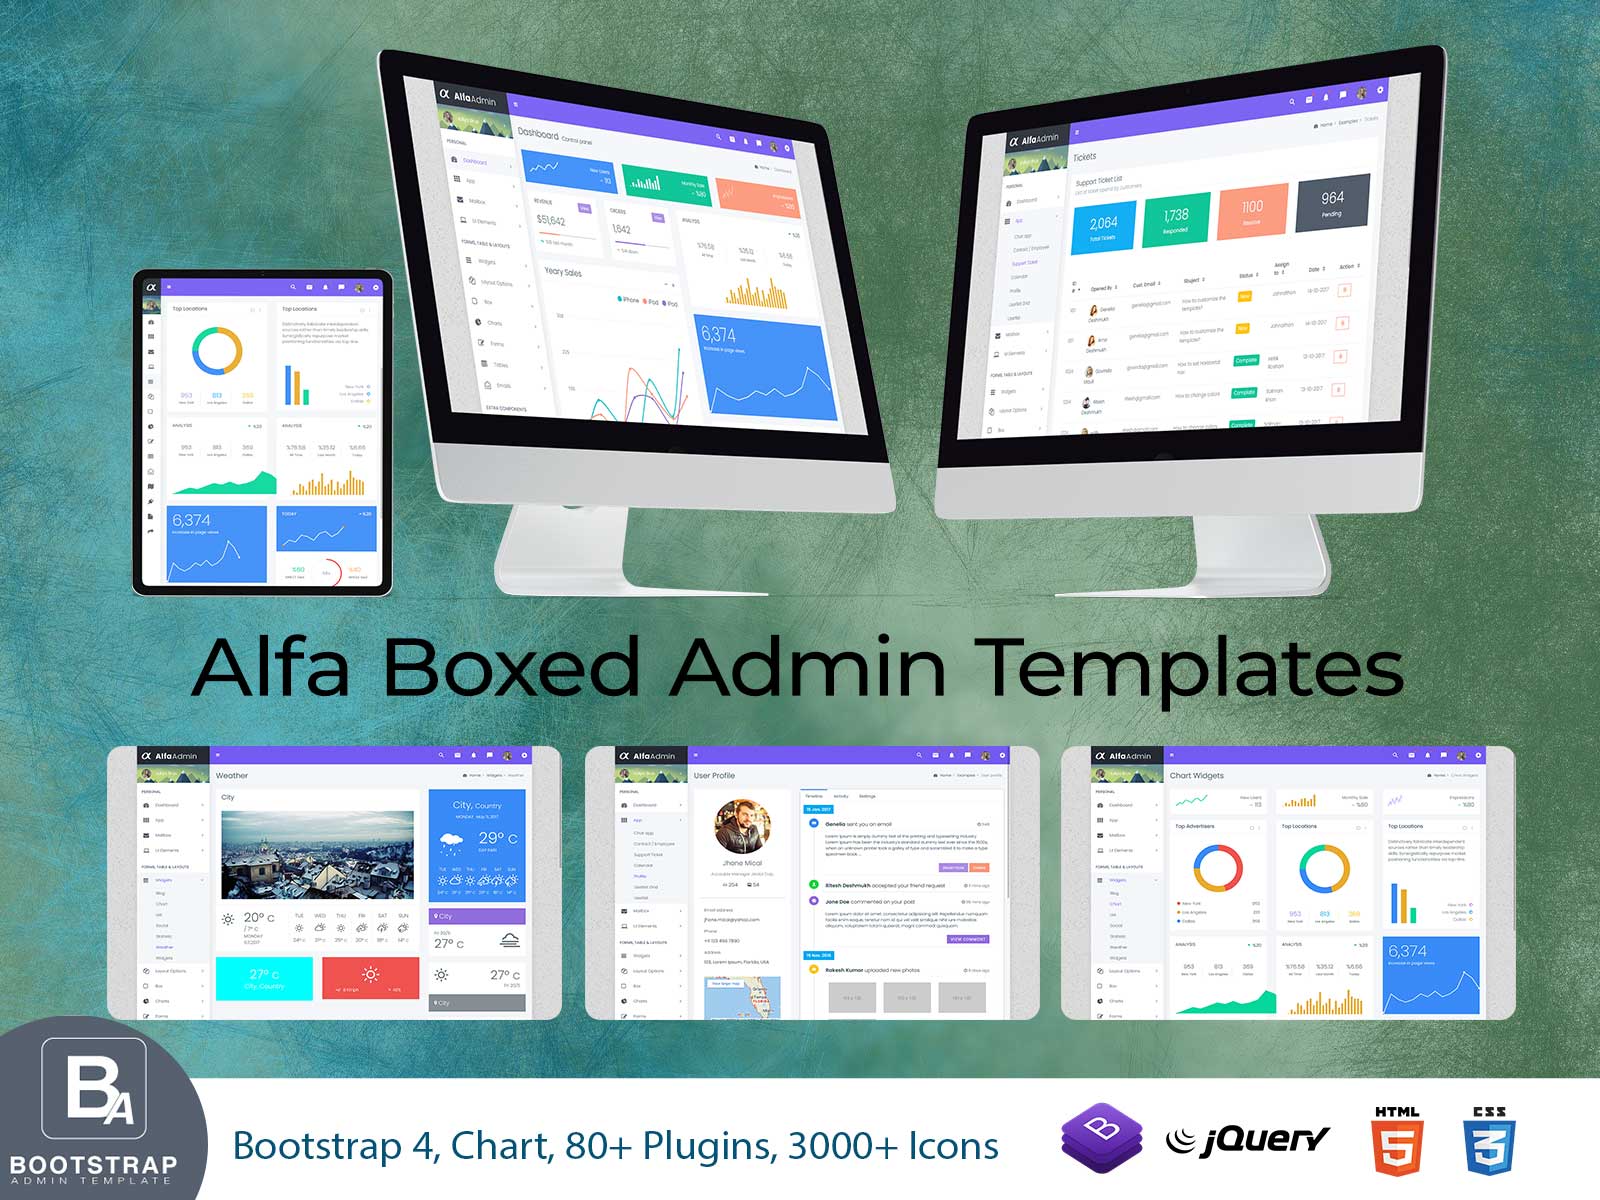 Alfa Boxed Admin Templates